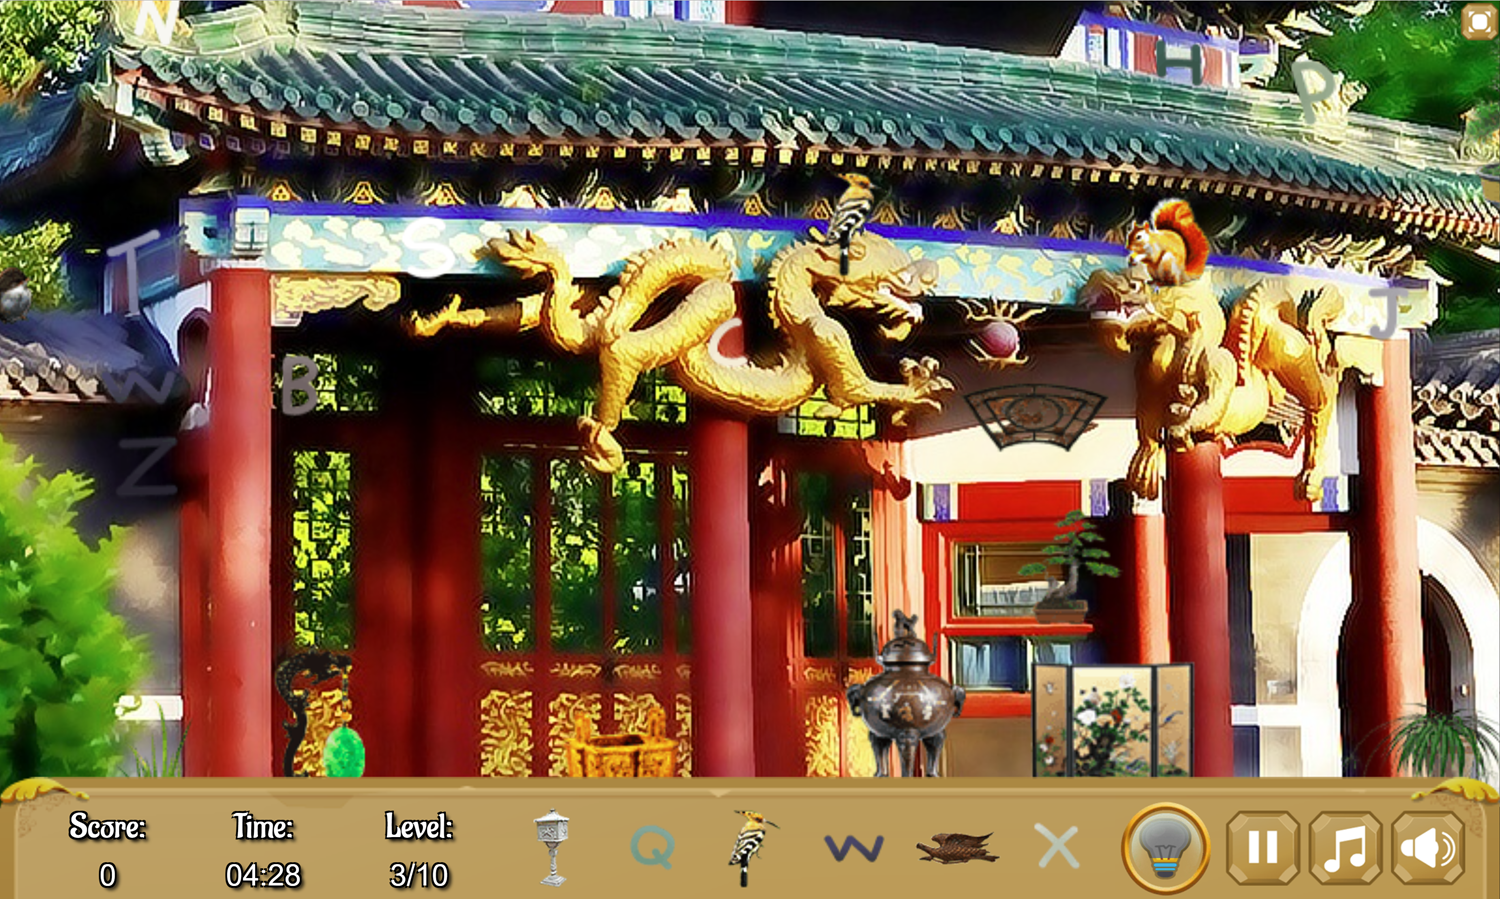 Beijing Hidden Objects Game Zoomed In Screenshot.